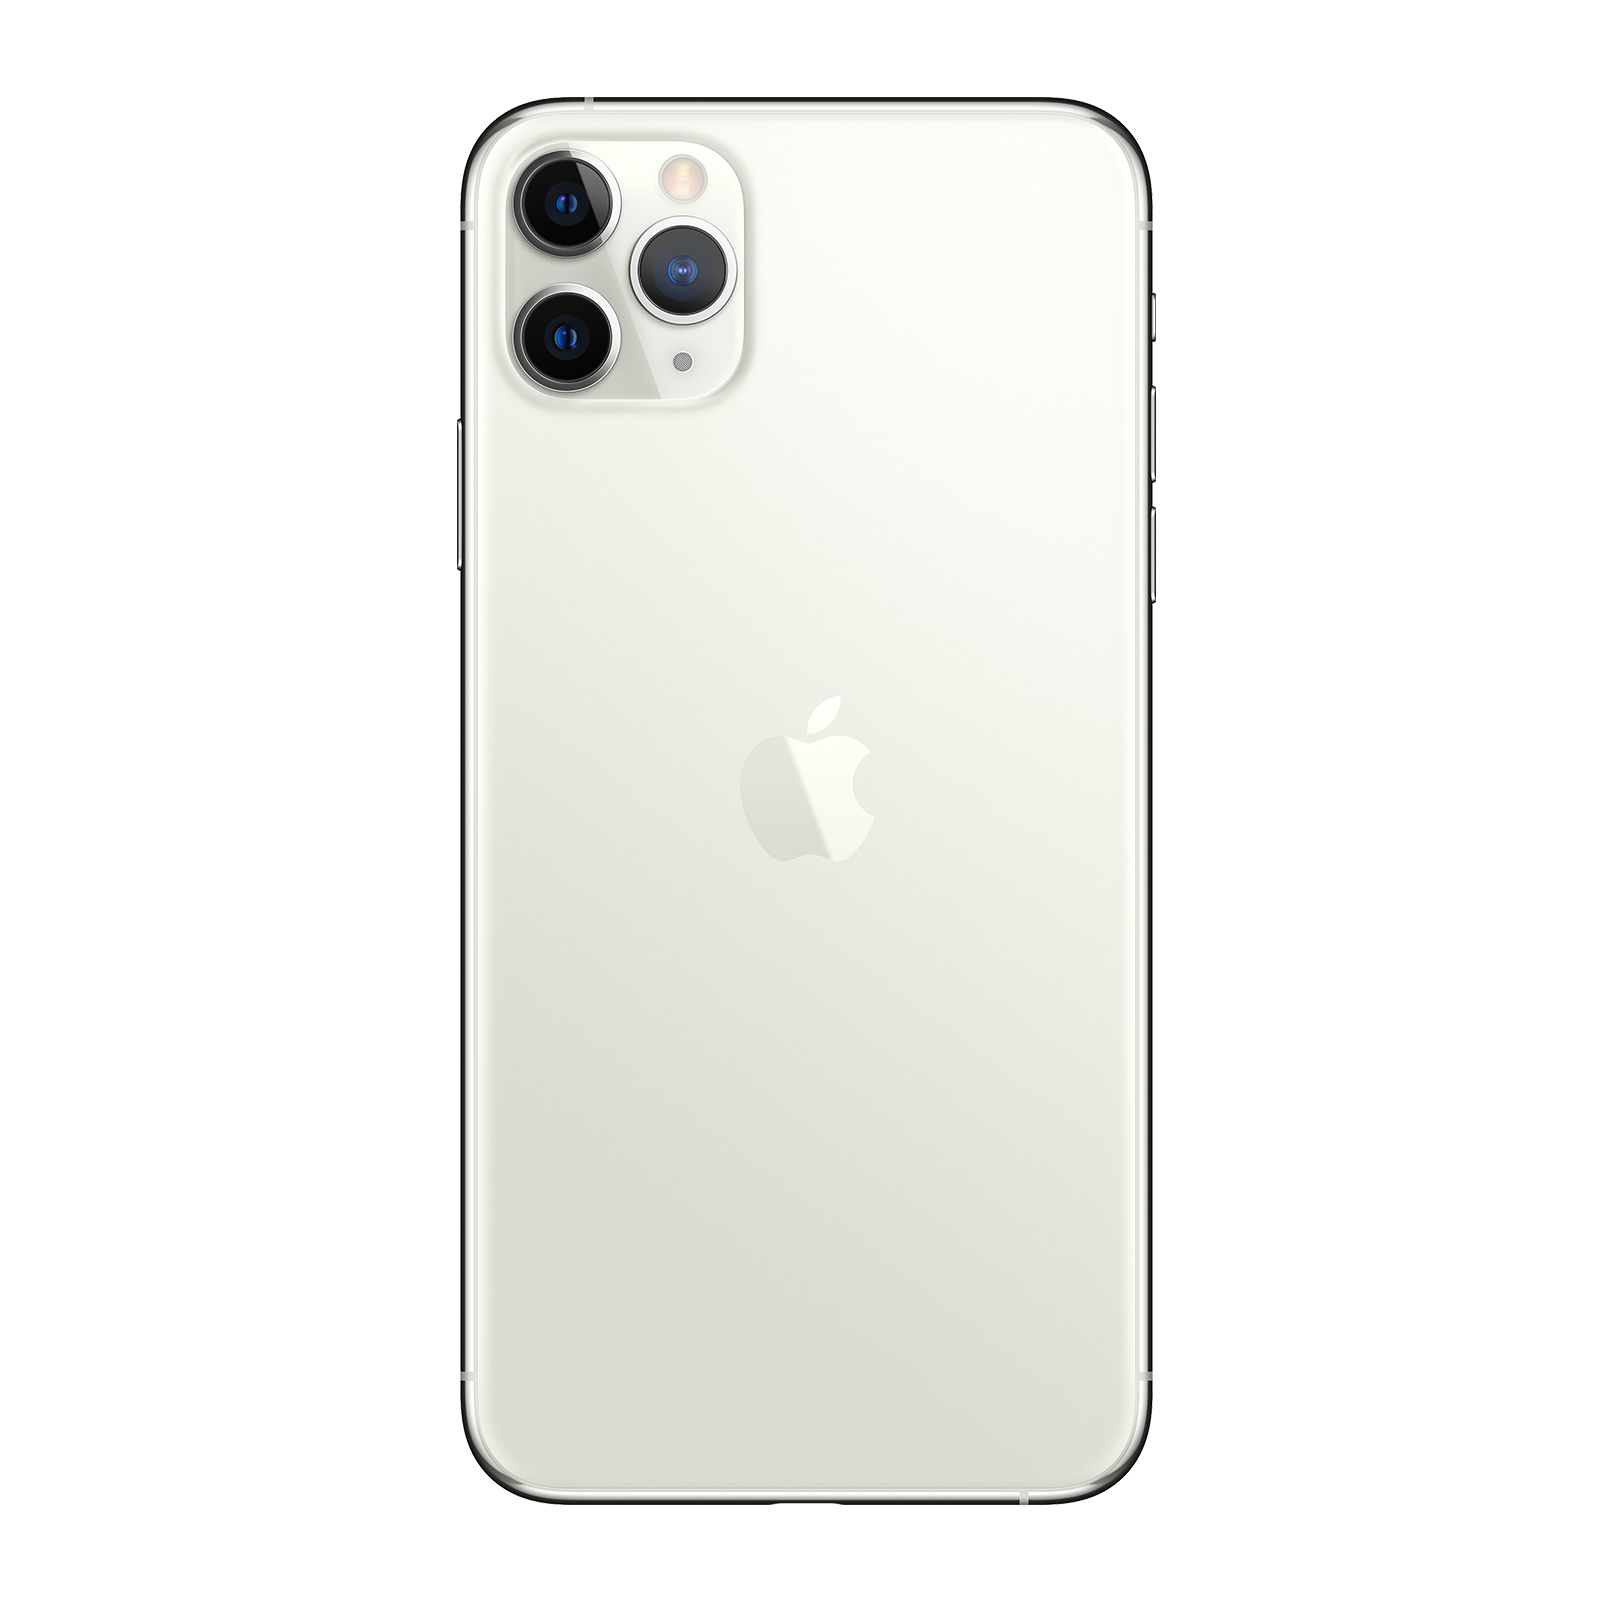 Apple iPhone 11 Pro Max 512GB Silver Very Good - Sprint